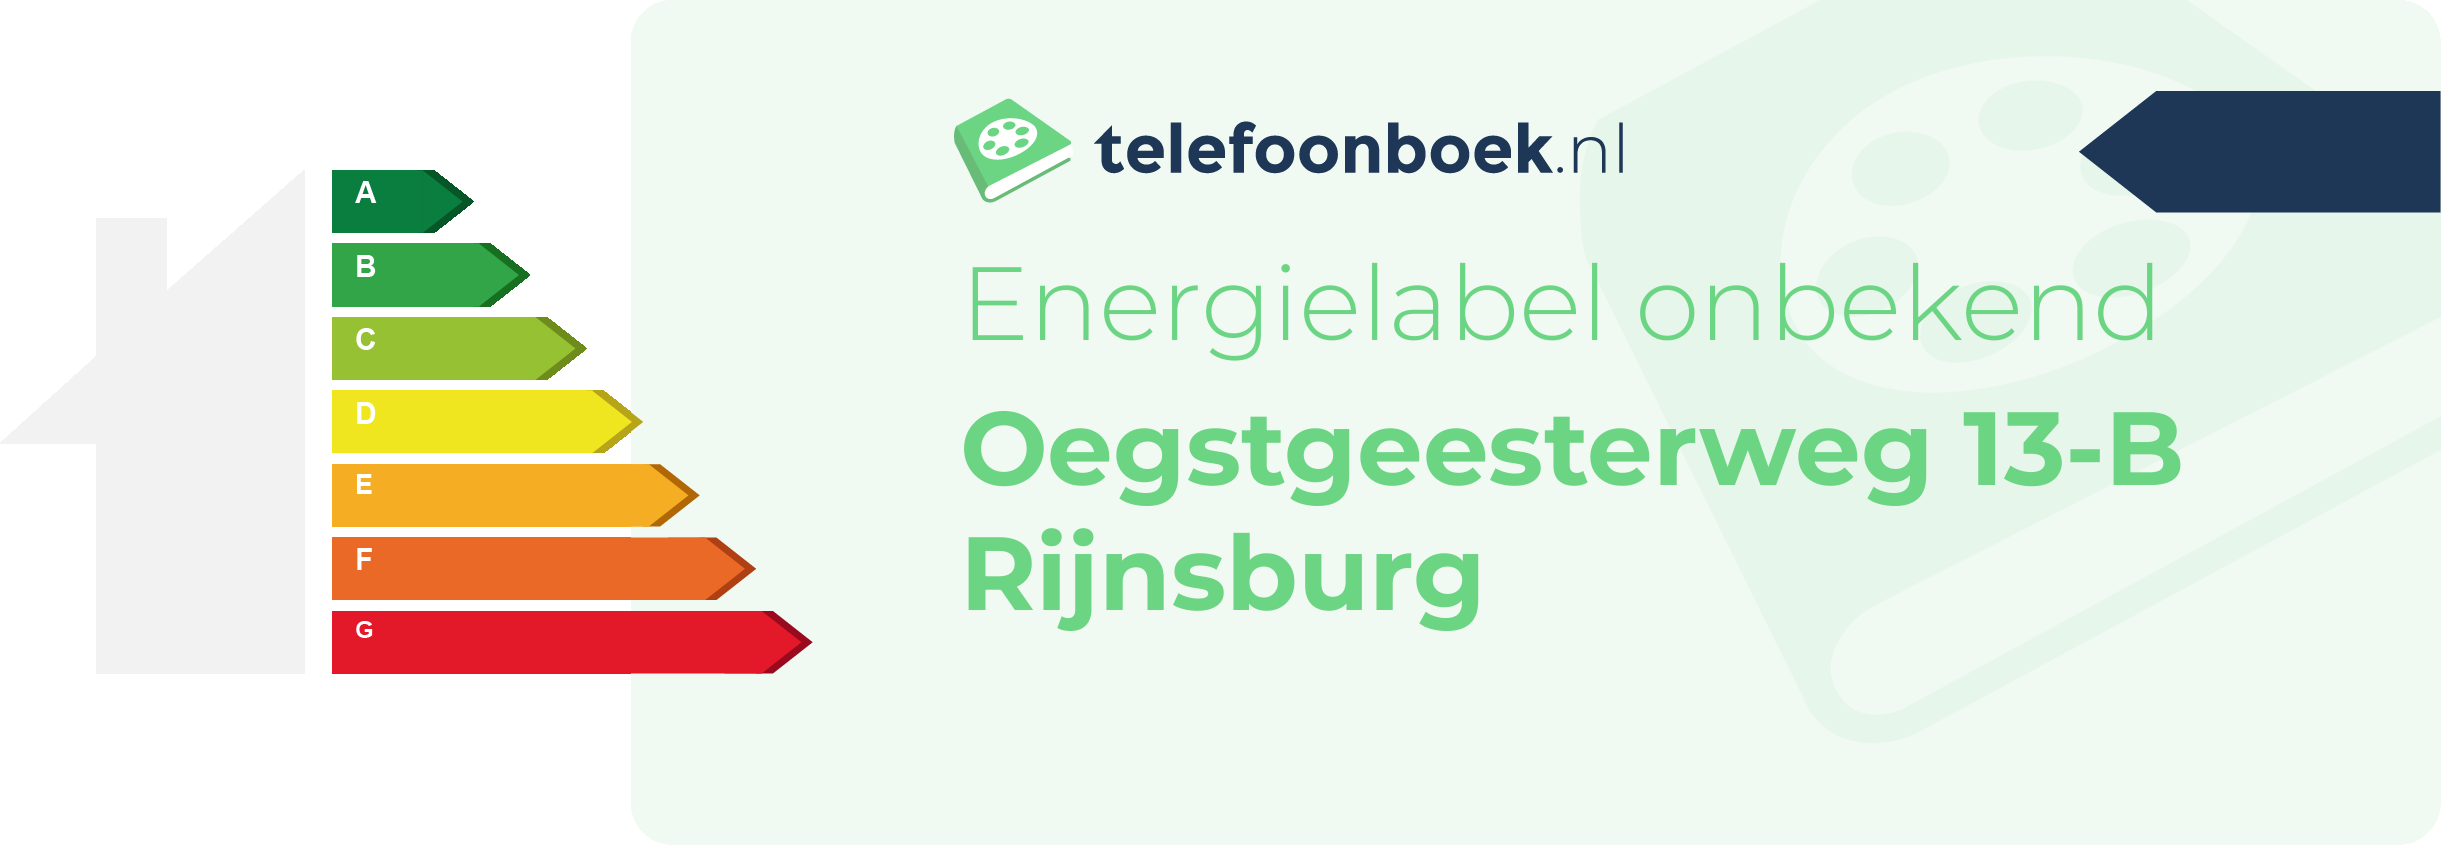 Energielabel Oegstgeesterweg 13-B Rijnsburg